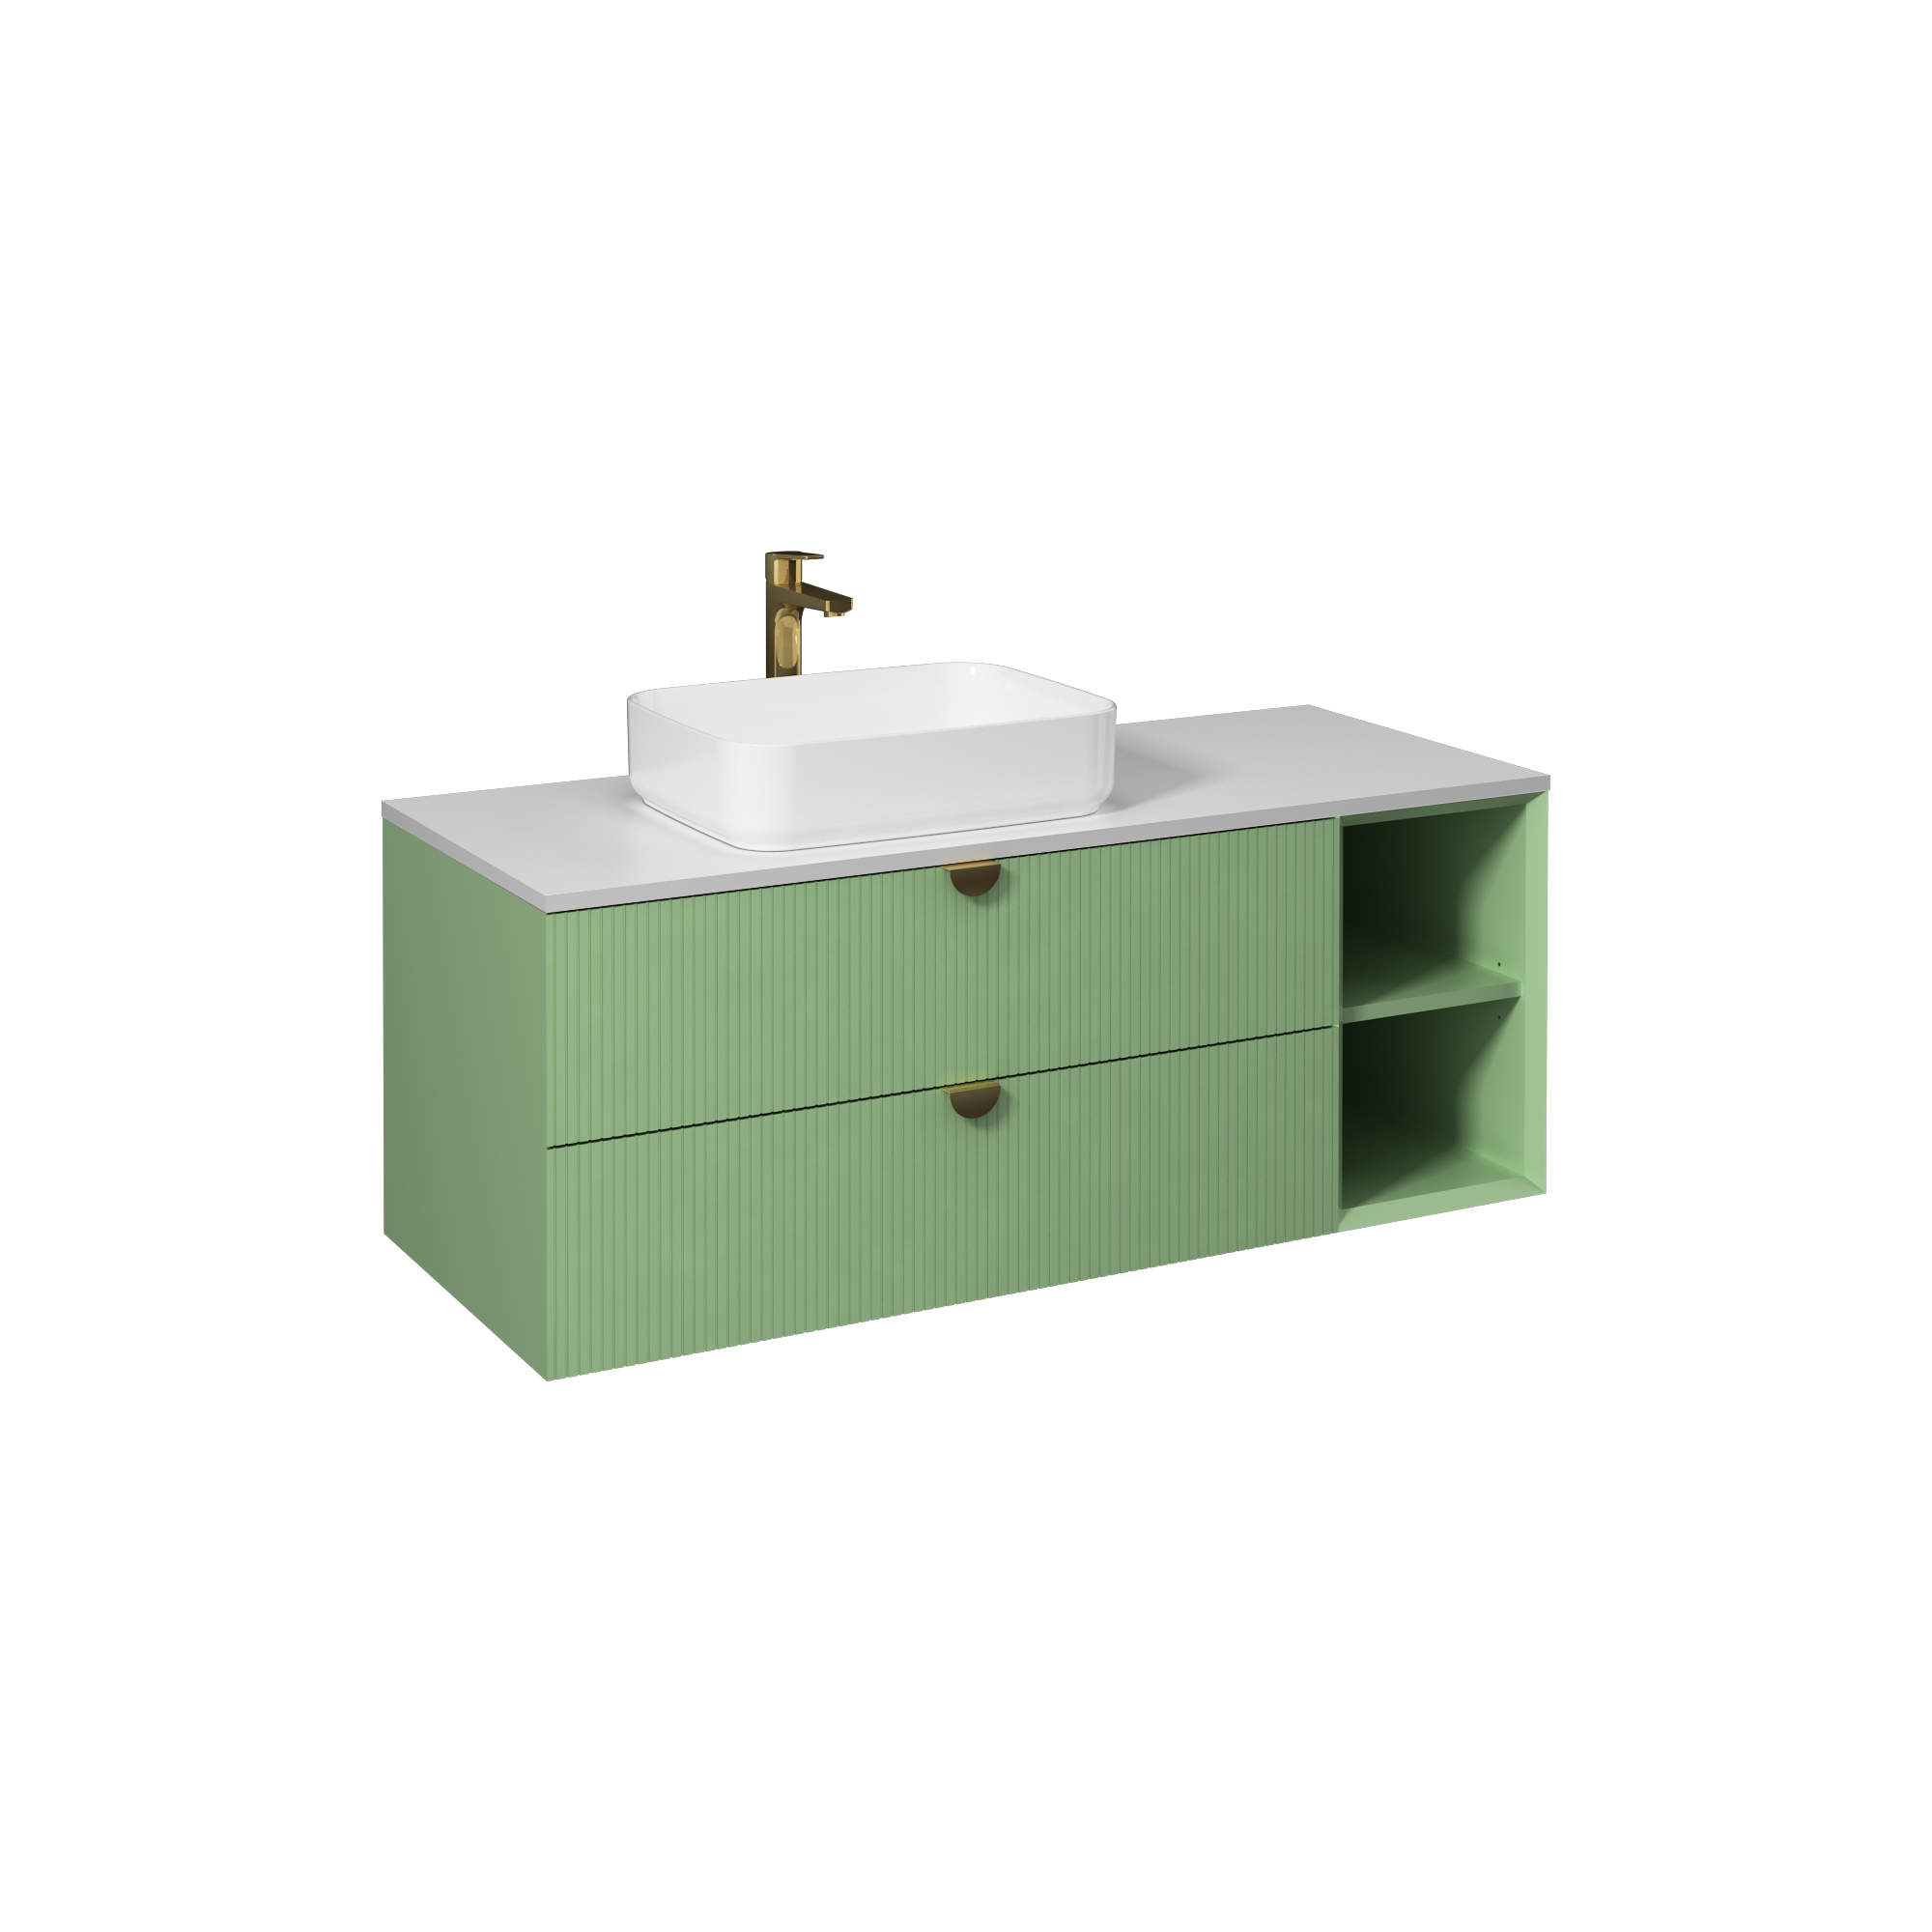 Infinity Washbasin Cabinet, Pastel Green, with White Washbasin 130 cm